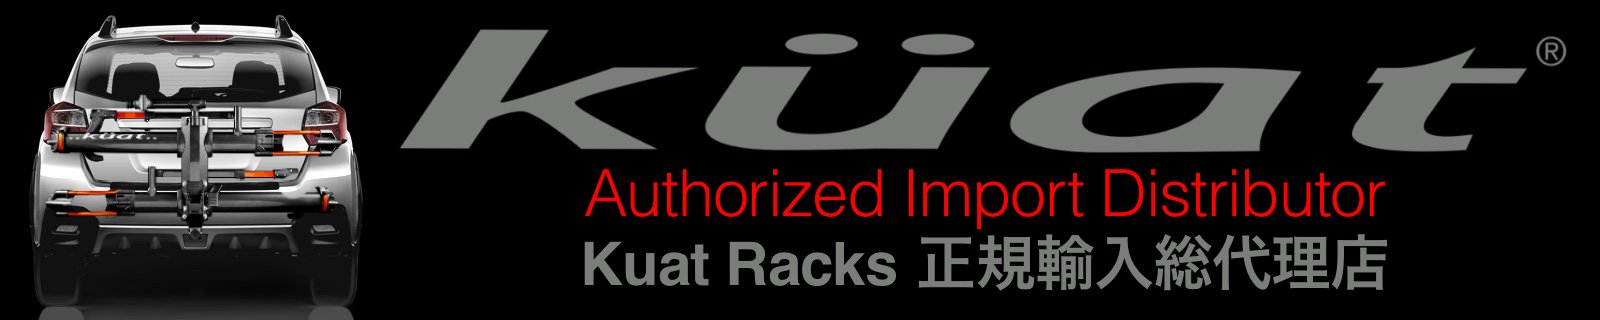 Kuat Racks 正規輸入総代理店 / Authorized Import Distributor